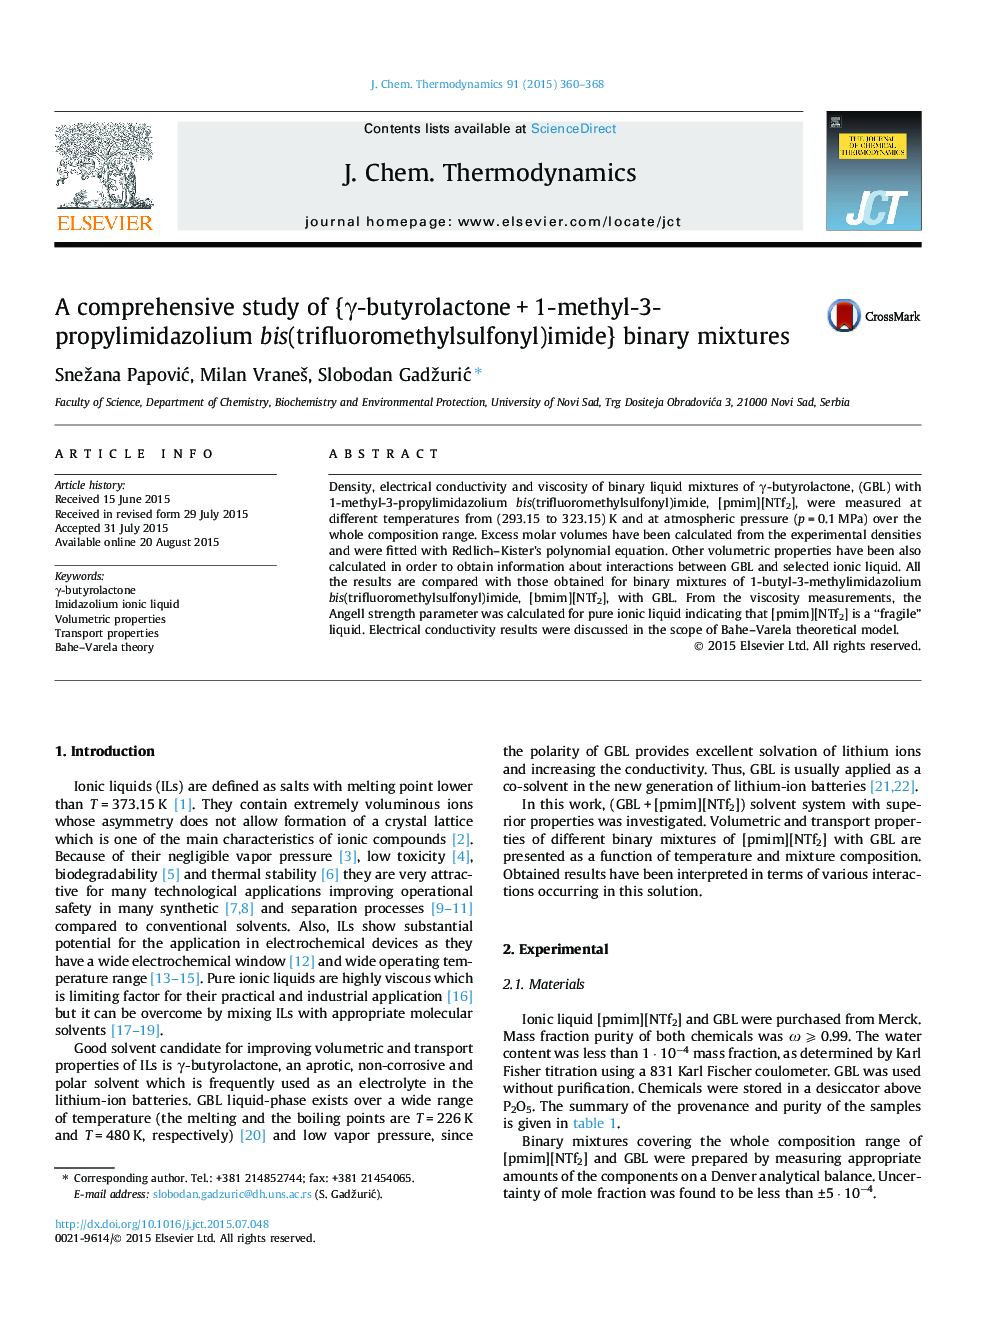 A comprehensive study of {Î³-butyrolactoneÂ +Â 1-methyl-3-propylimidazolium bis(trifluoromethylsulfonyl)imide} binary mixtures